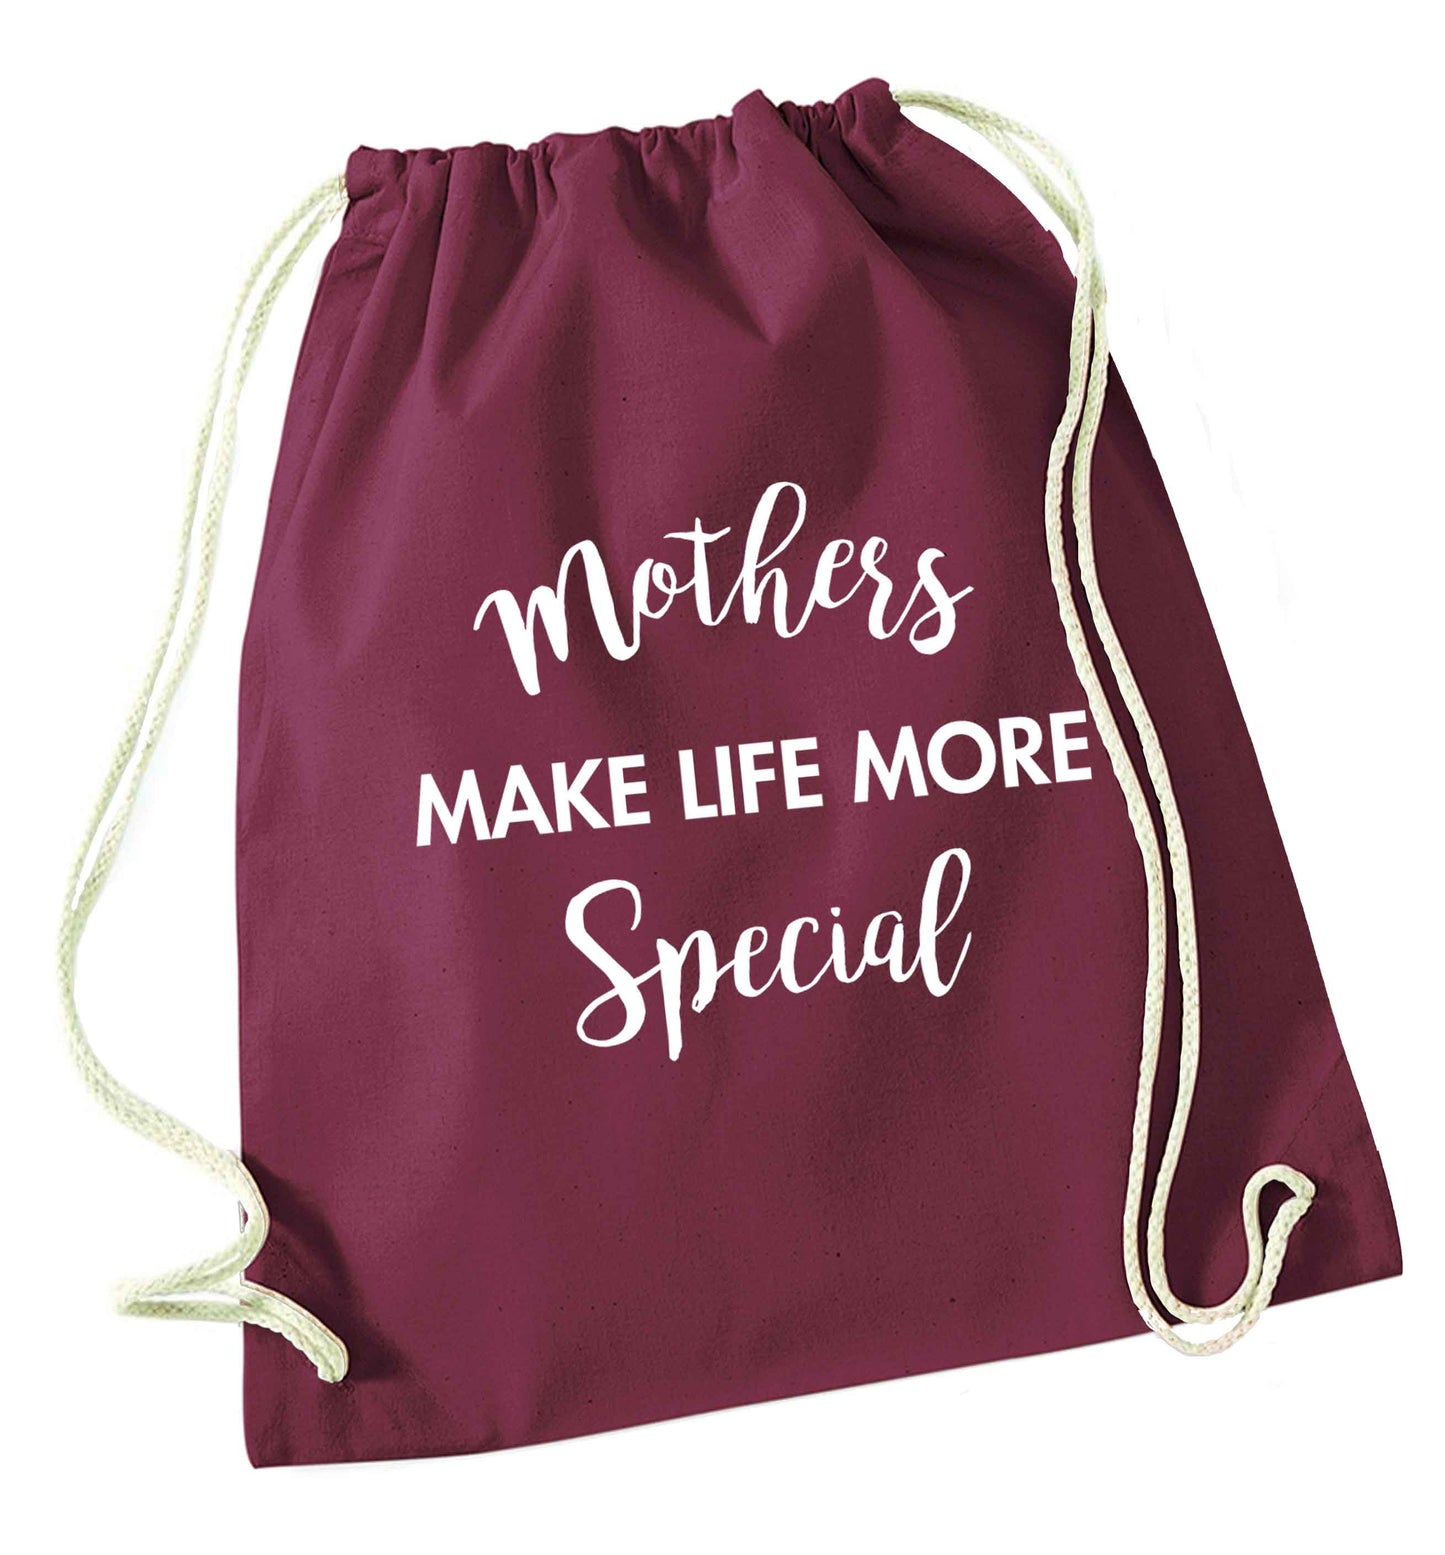 Mother's make life more special maroon drawstring bag